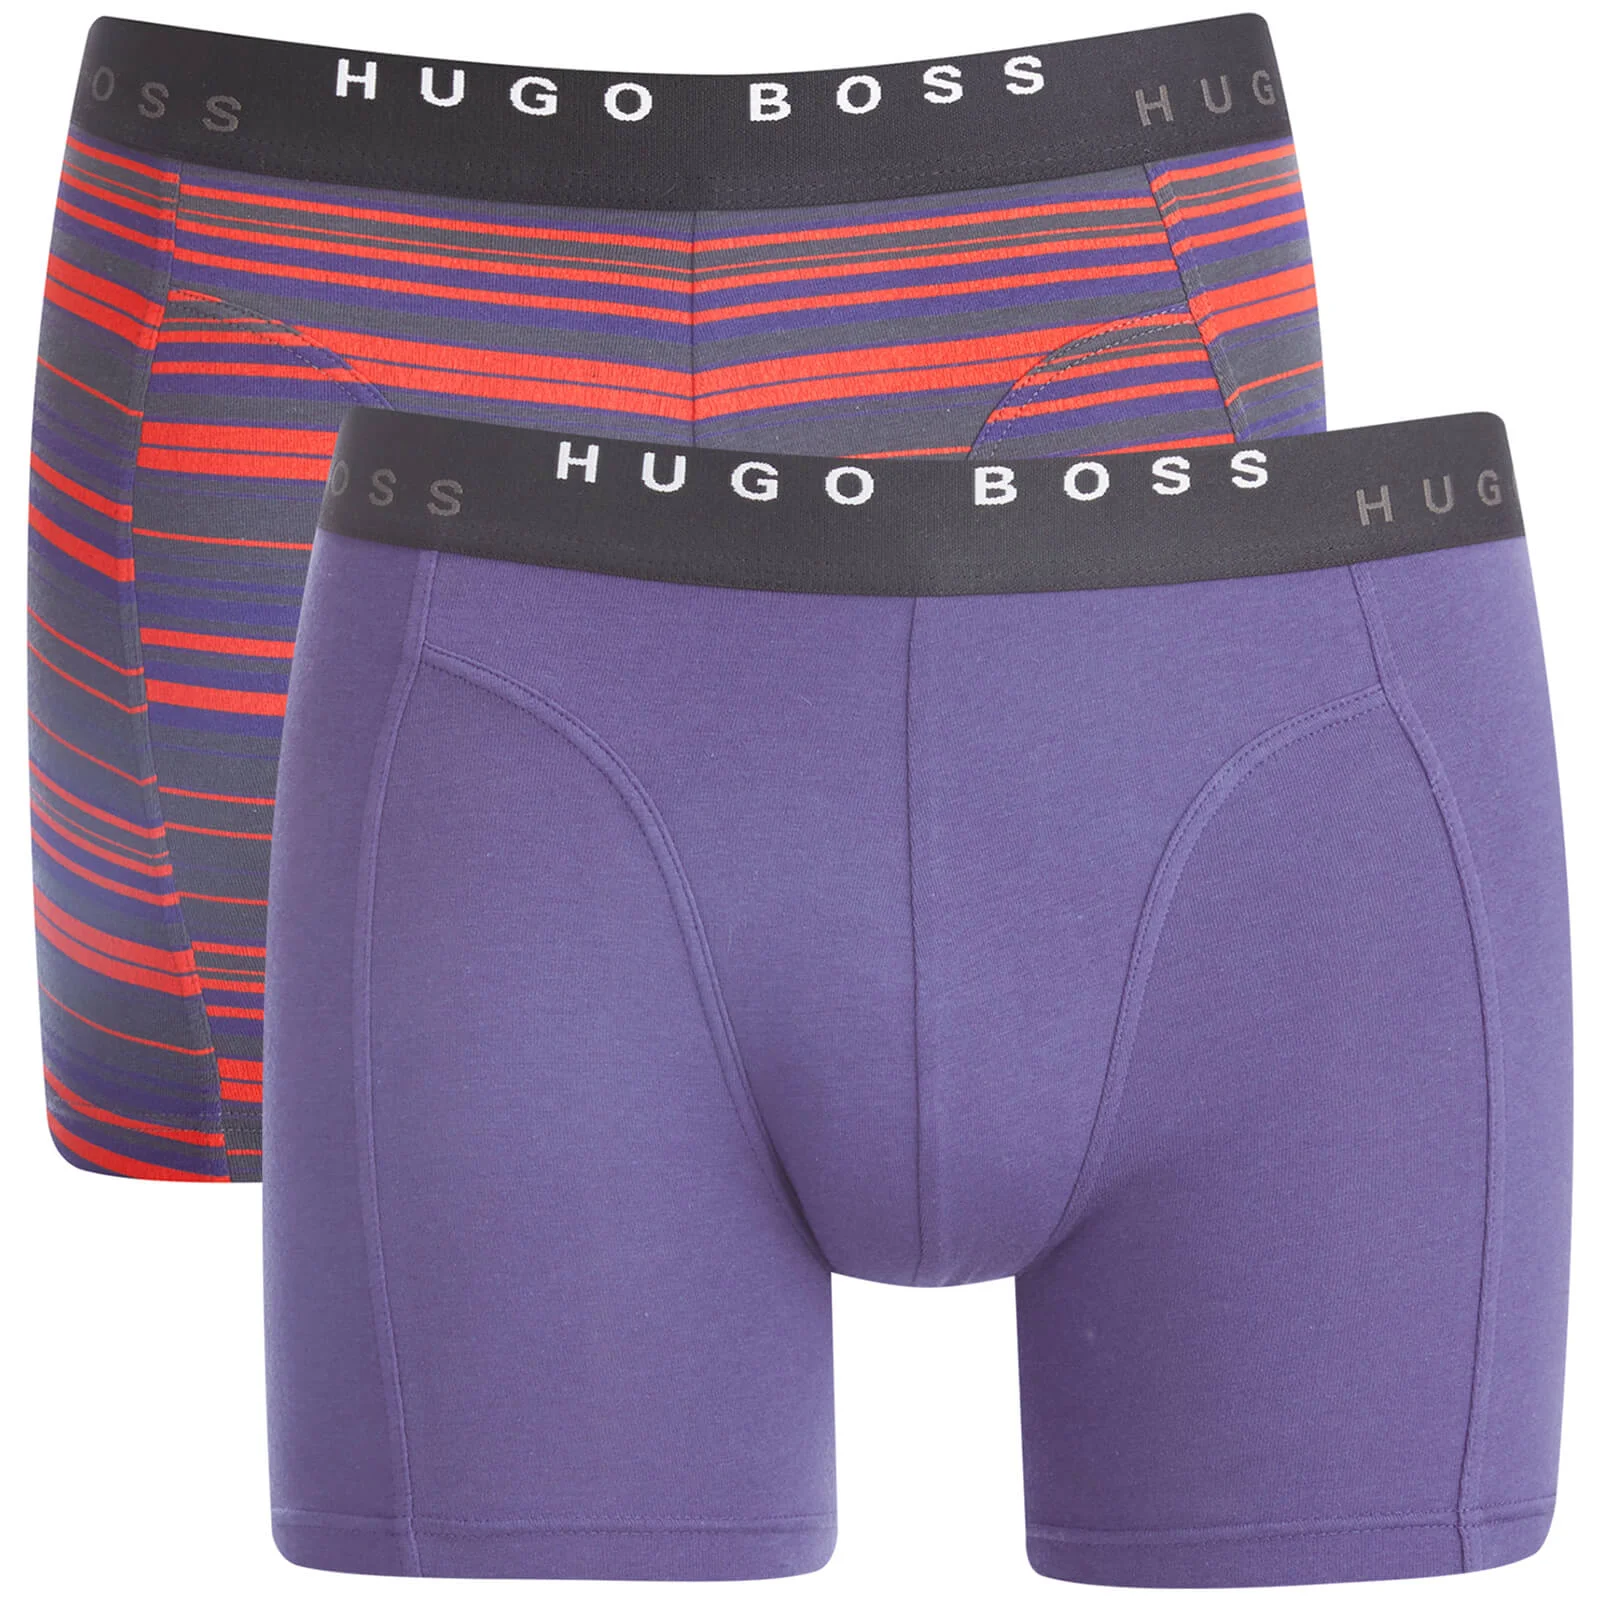 BOSS Hugo Boss Men's 2 Pack Cyclist Boxer Shorts - Open Red Image 1